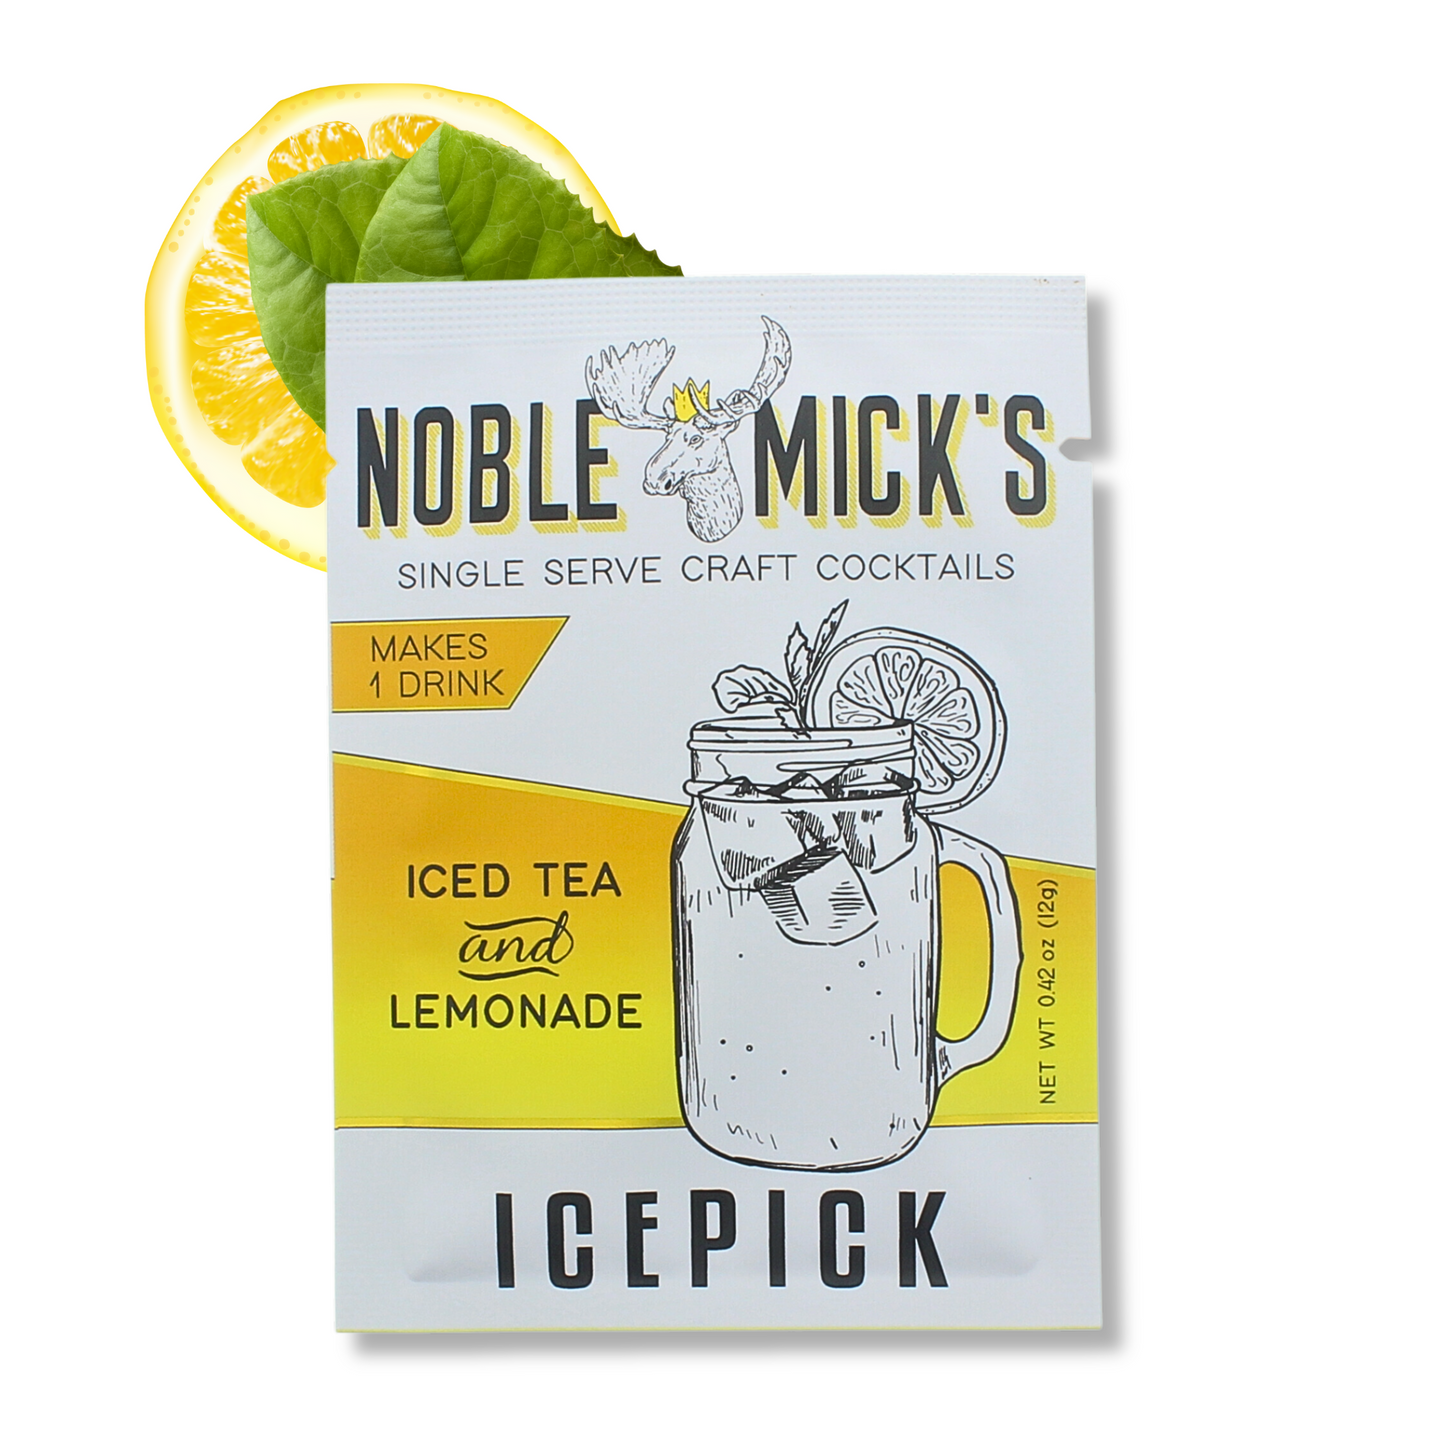 Icepick